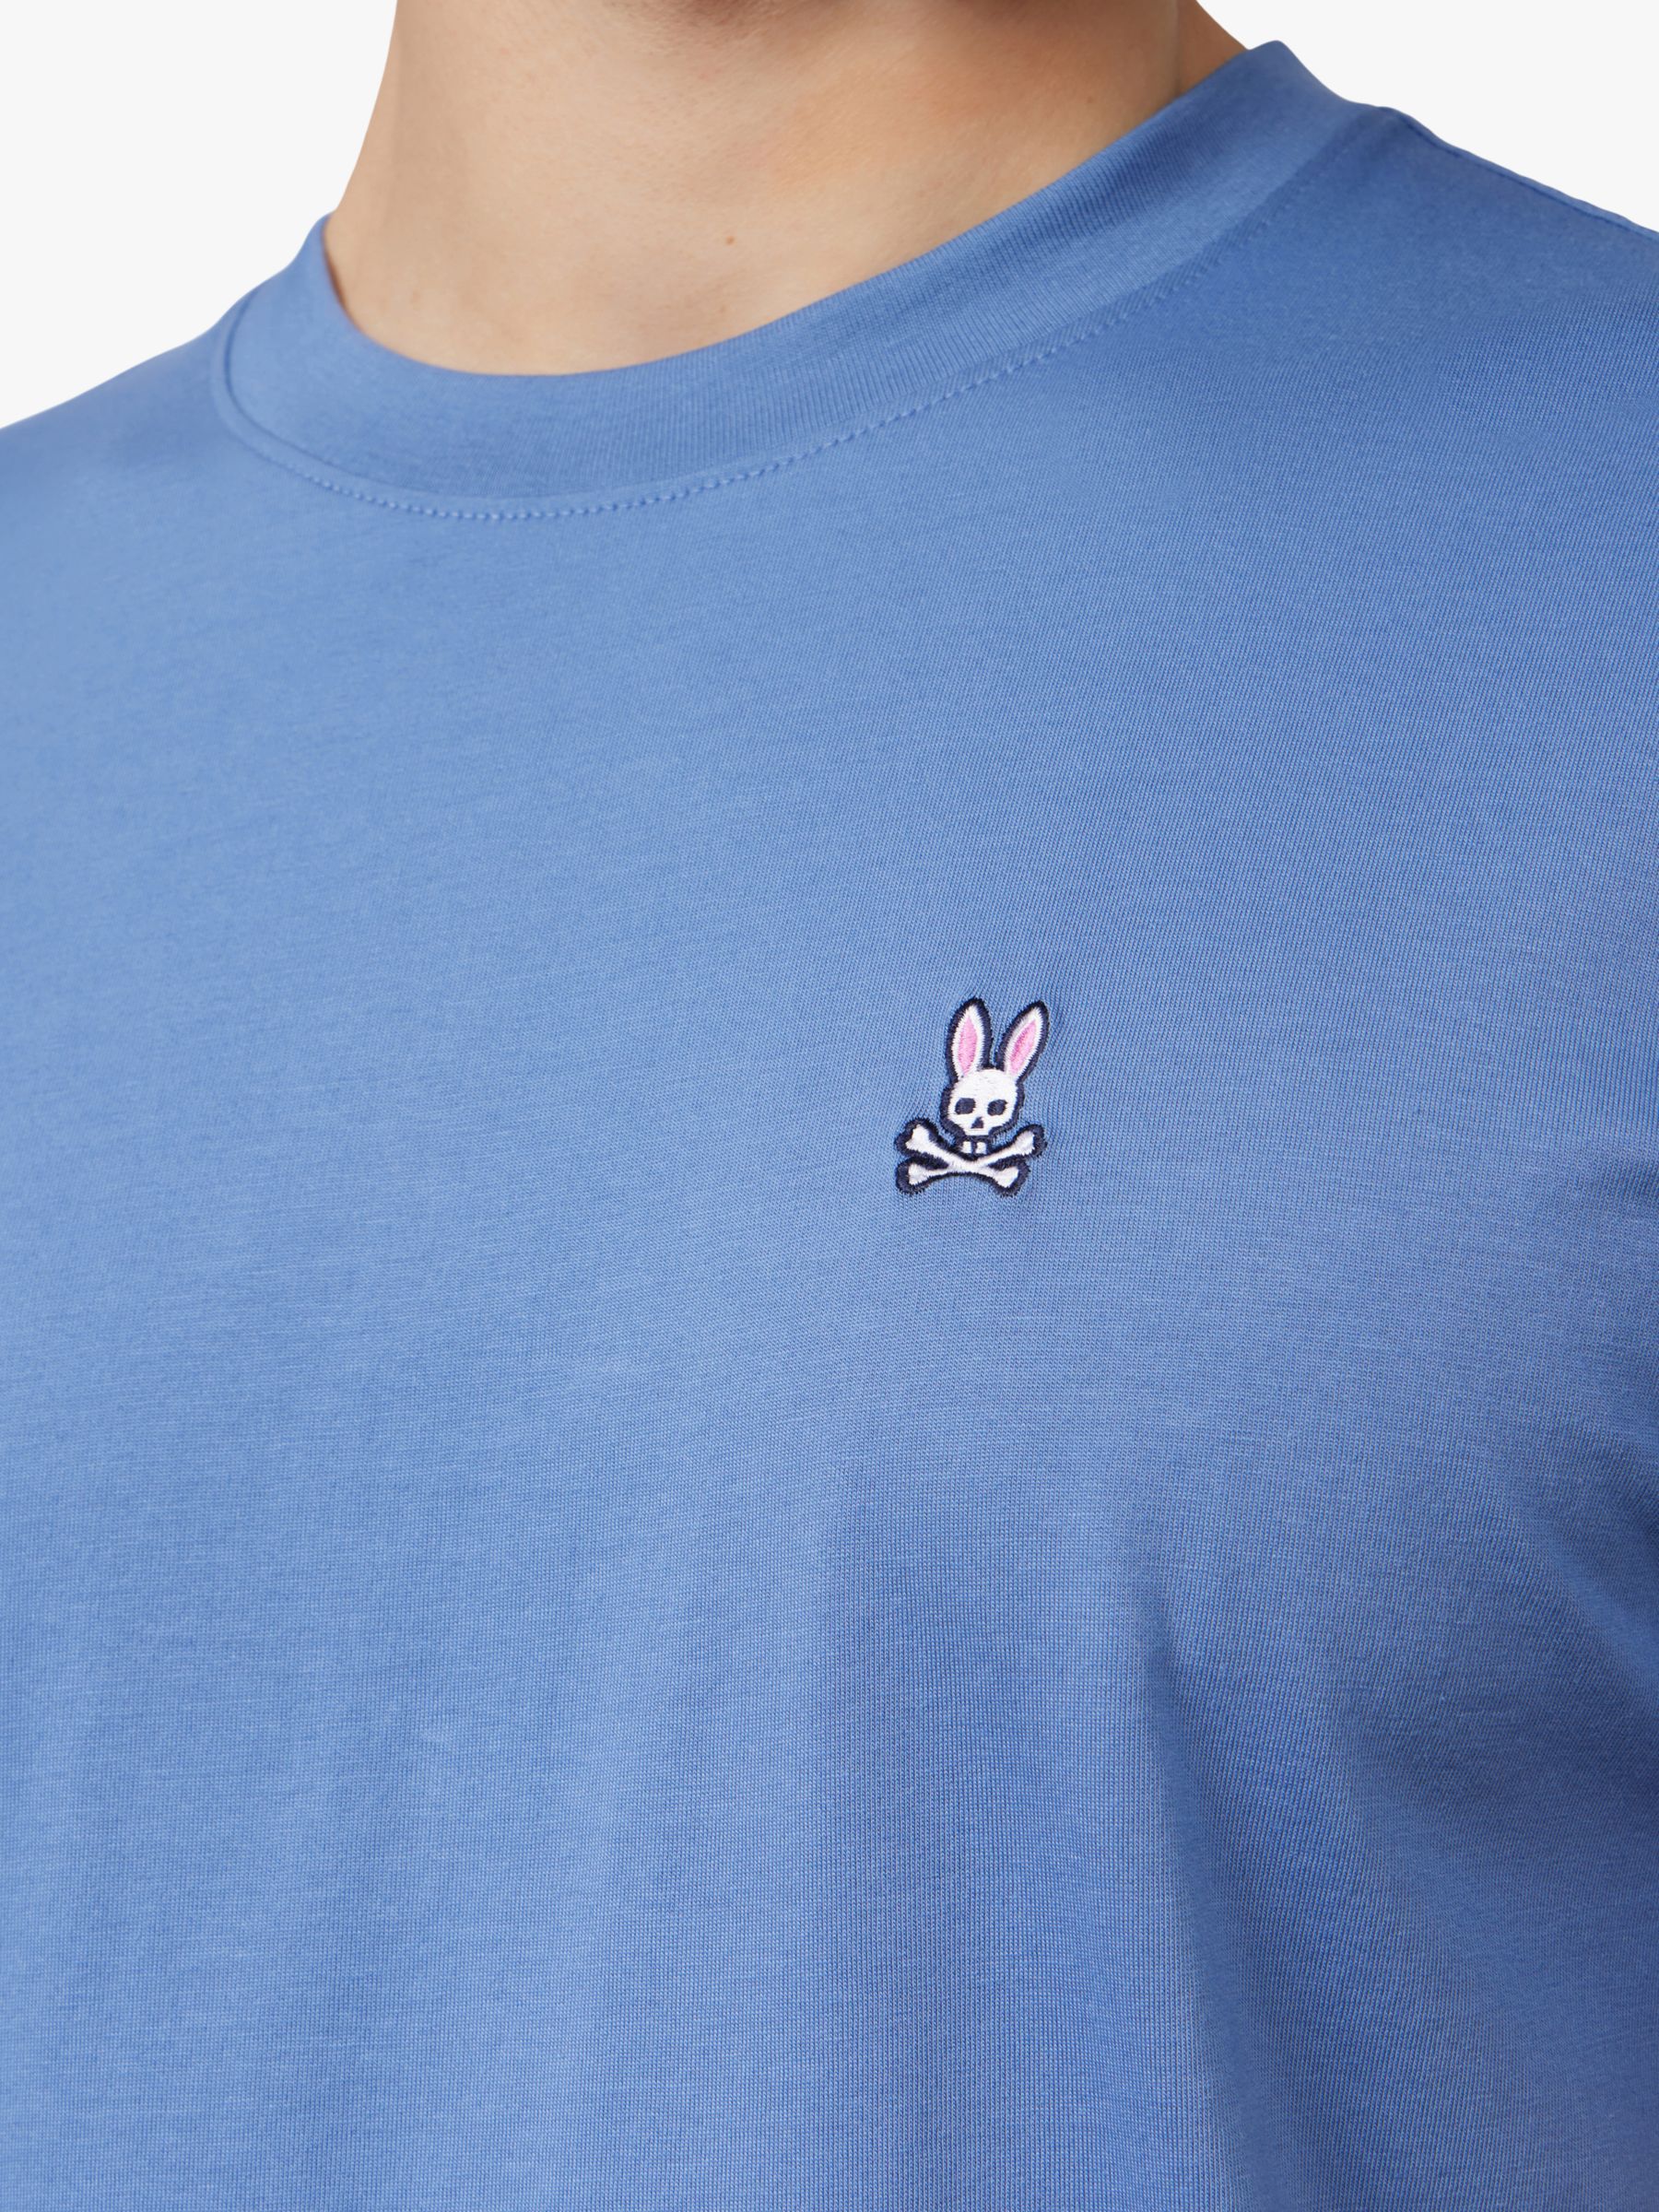 Psycho Bunny Classic Logo Crew Neck Pima Cotton T-Shirt, Bal Harbour, S